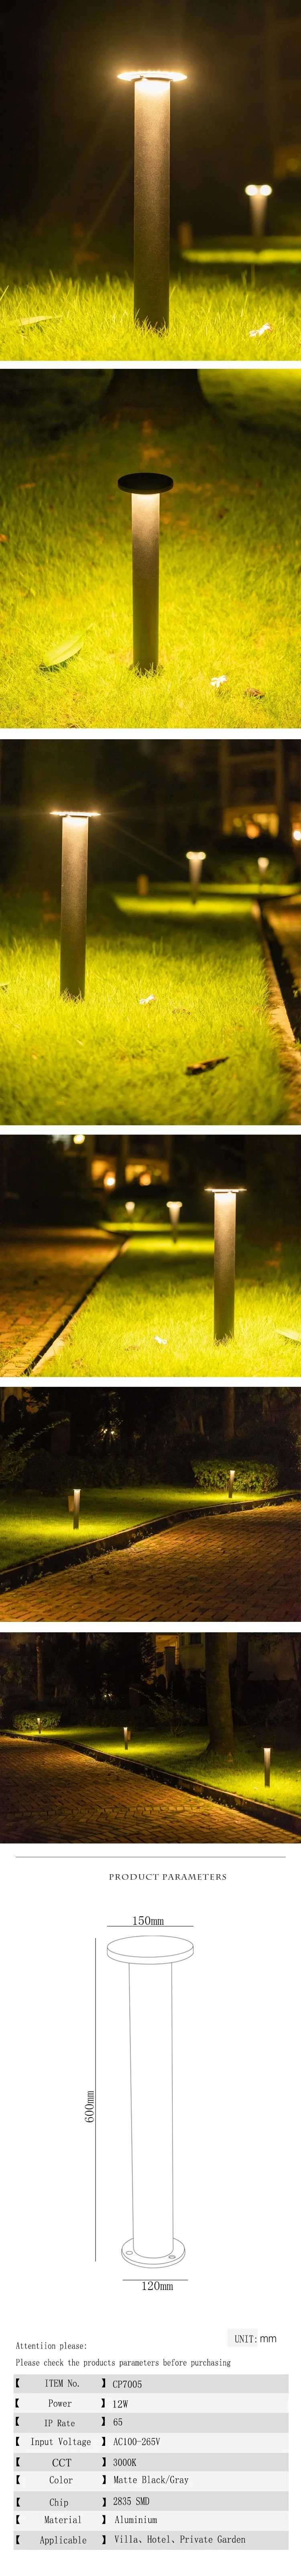 2021 Animal Fairy RGB Metal Lantern Hanging Water Free Sample Christmas Outdoor Nice Colored Garden Solar Lights